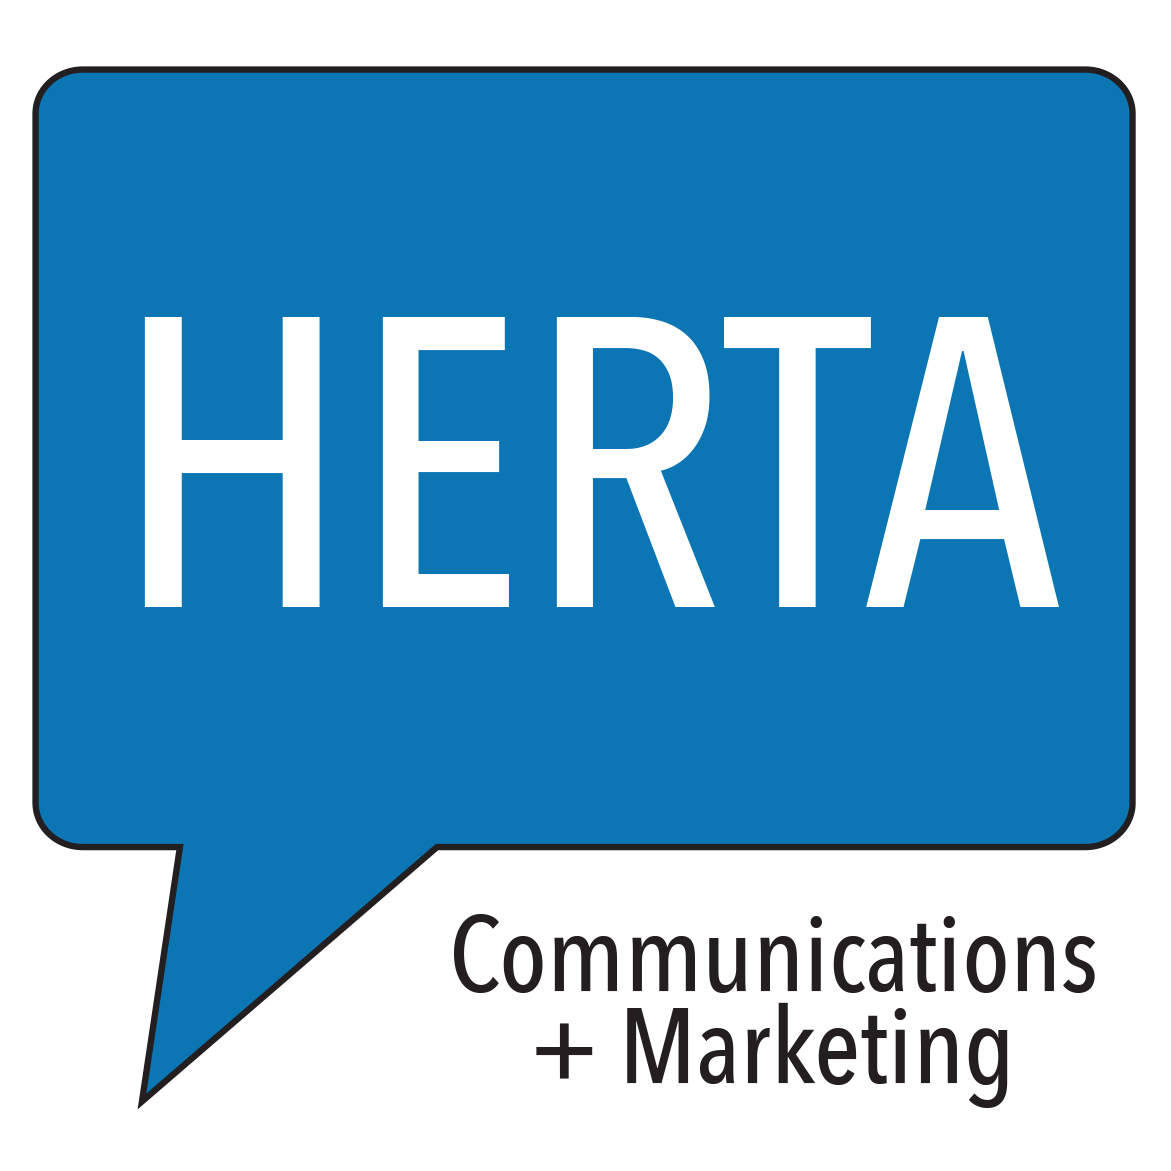 Herta Communications